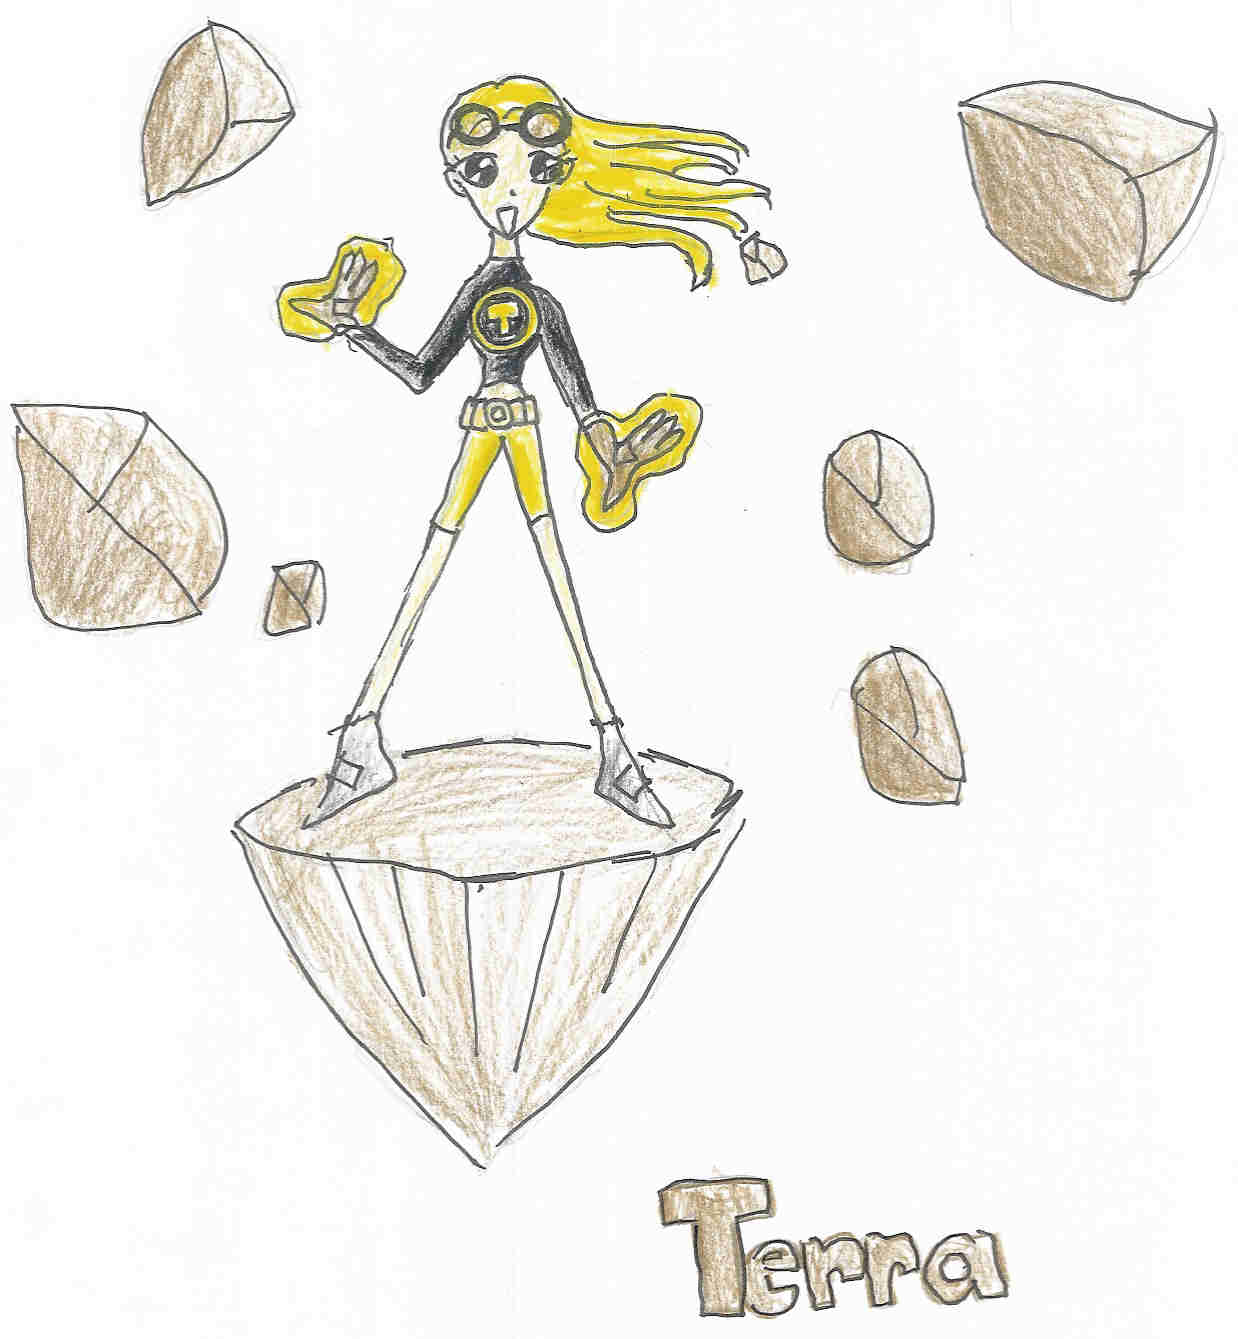 Terra by Titansluvr